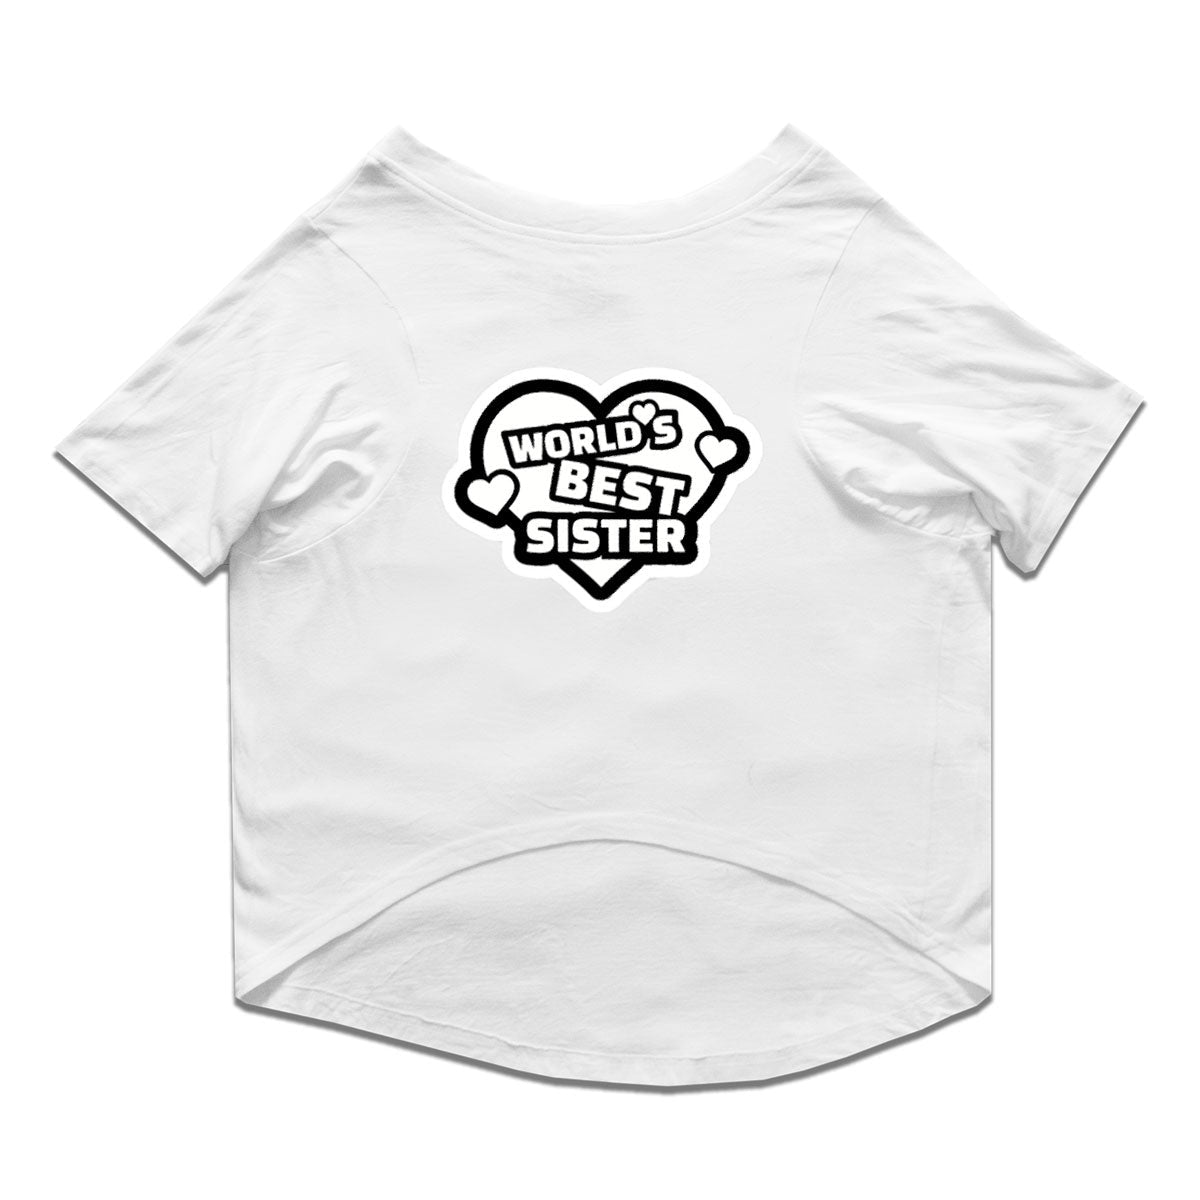 Ruse / White Ruse Basic Crew Neck "World's Best Sister" Printed Half Sleeves Dog Tee14